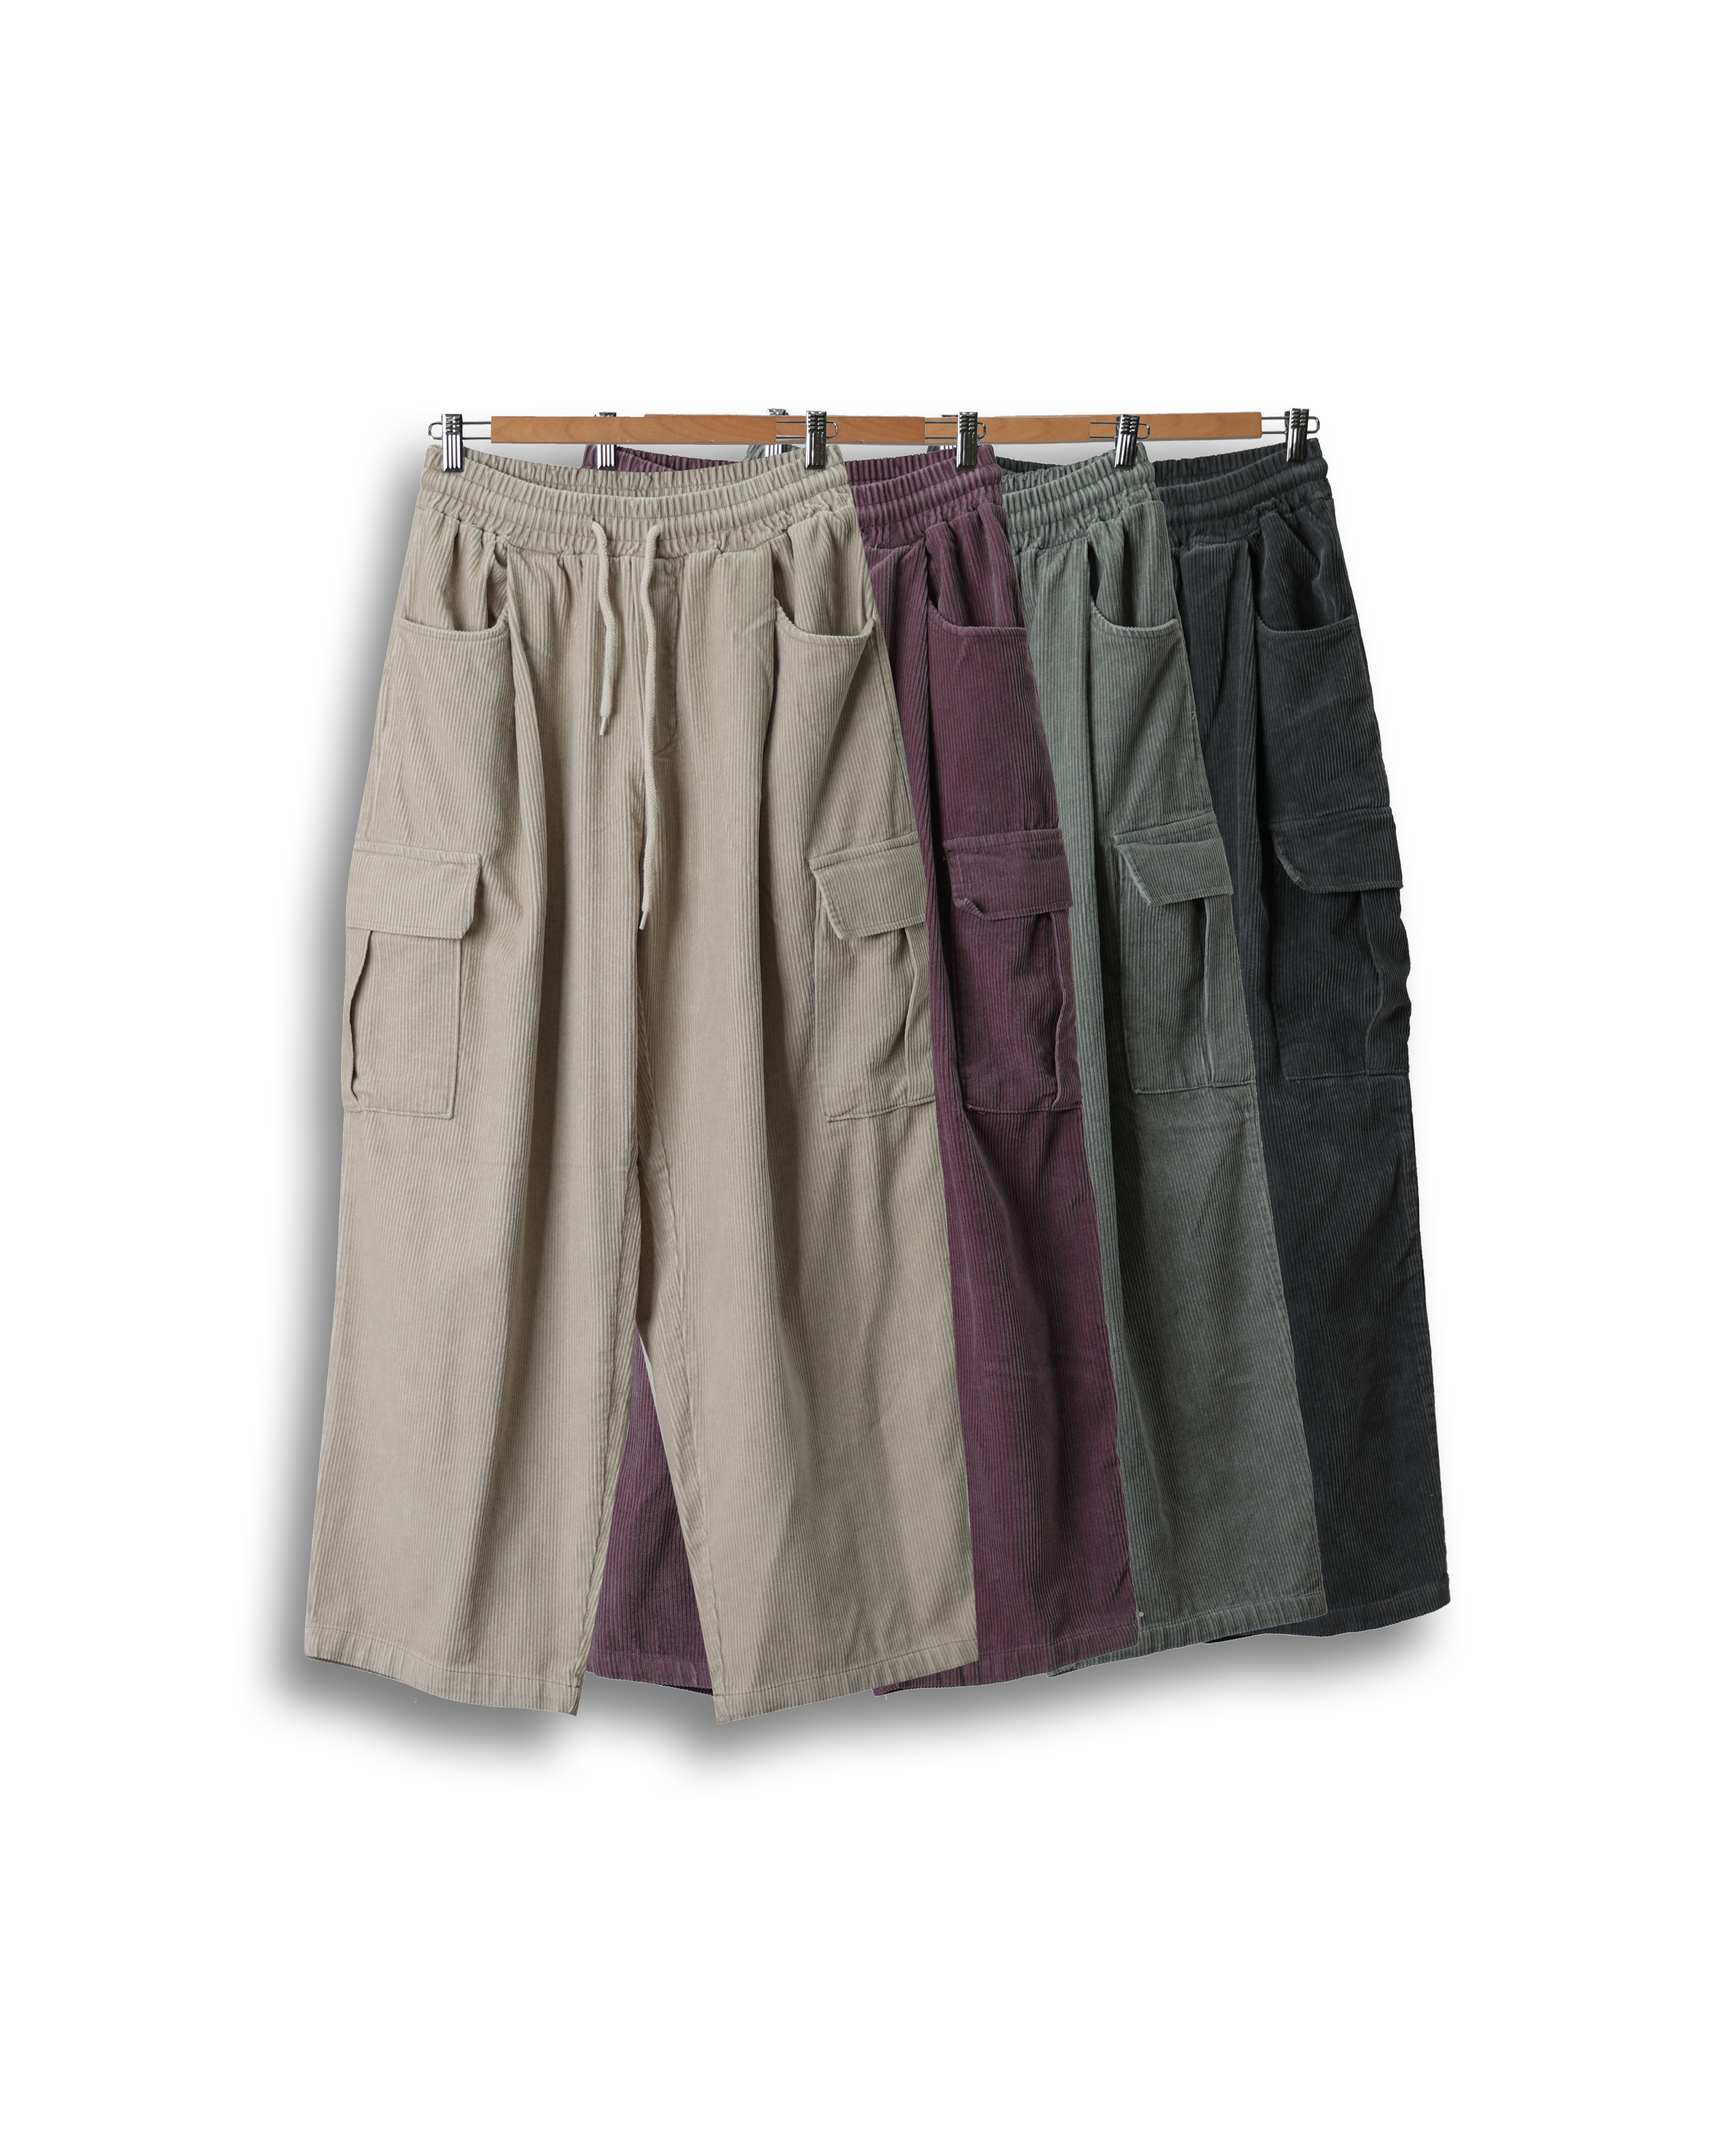 RAMS FICTION Pigment Corduroy Cargo Pants (Charcoal/Olive Gray/Wine/Beige)